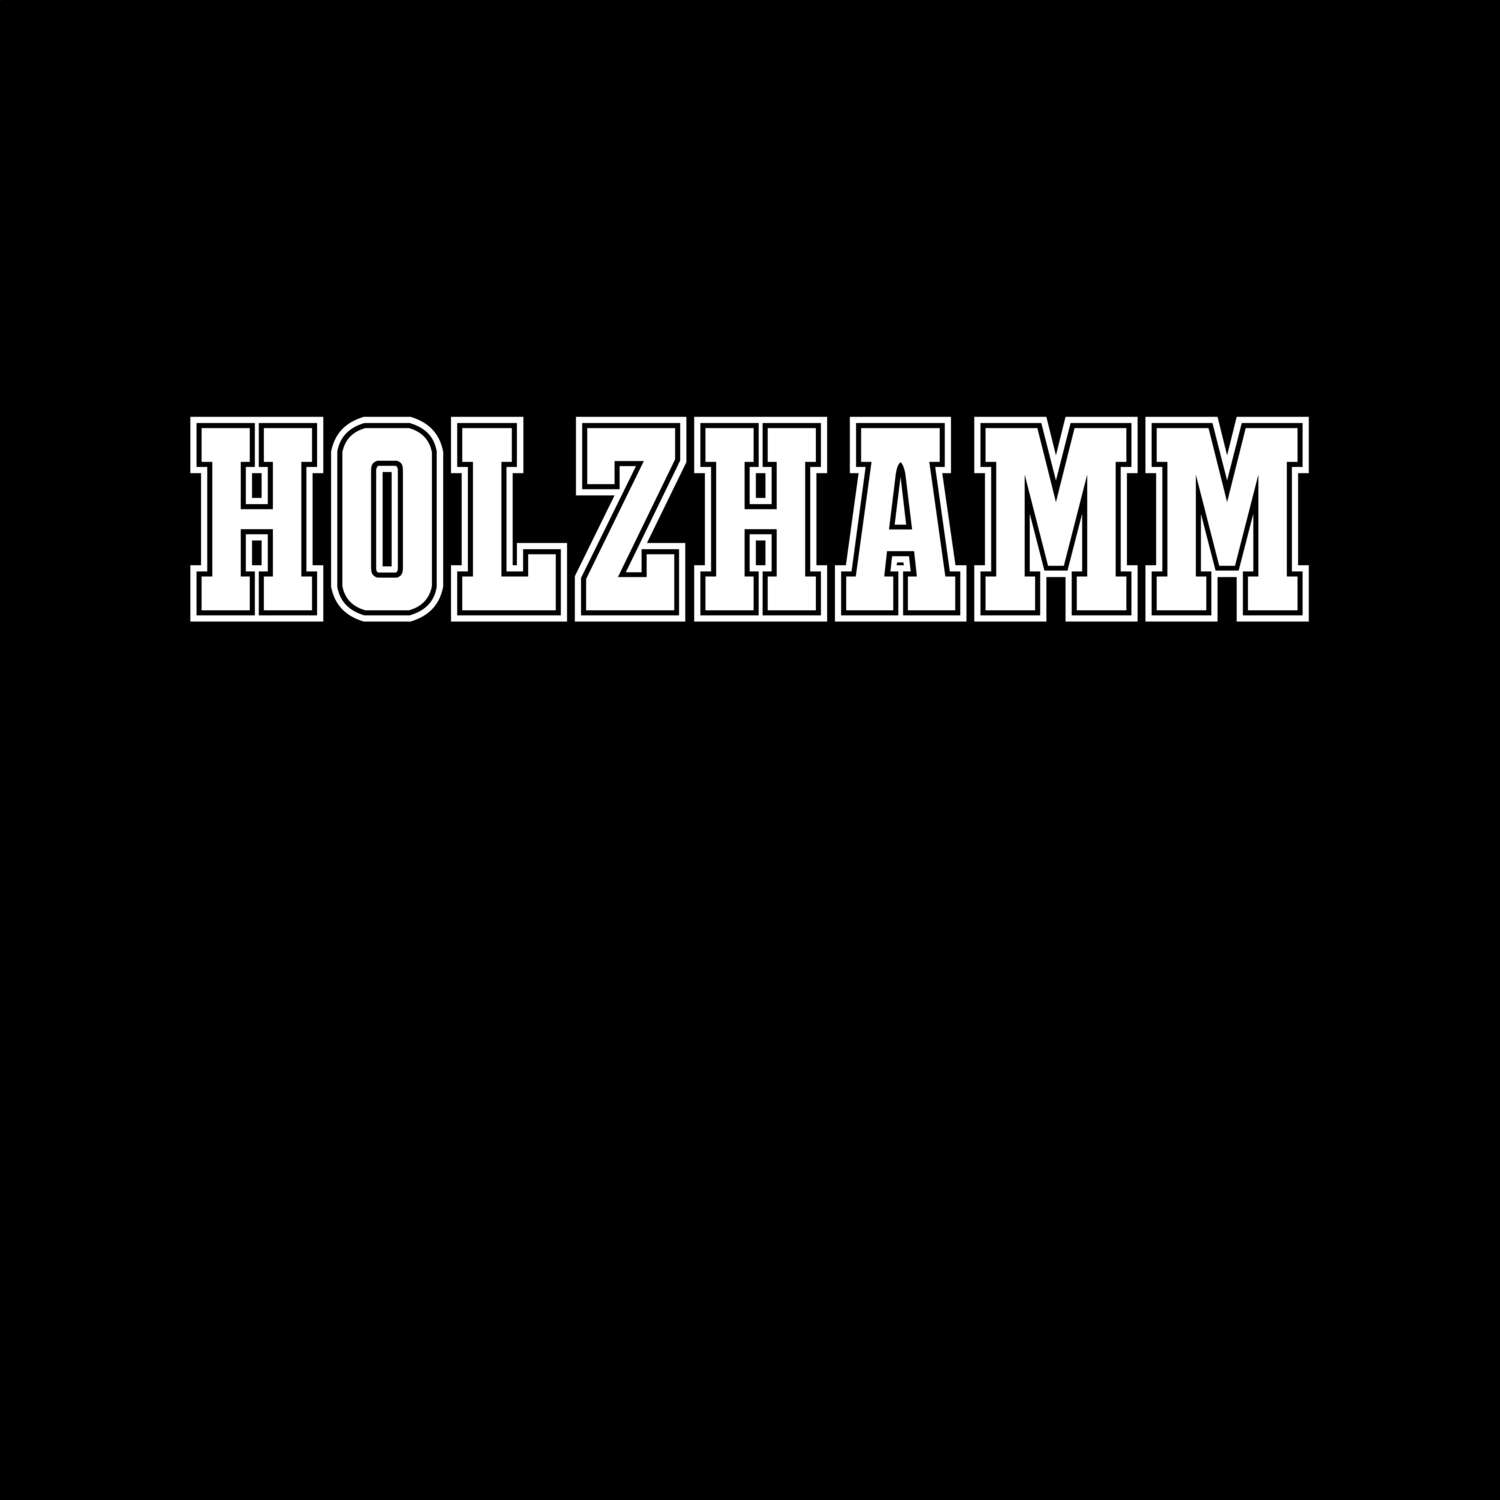 Holzhamm T-Shirt »Classic«